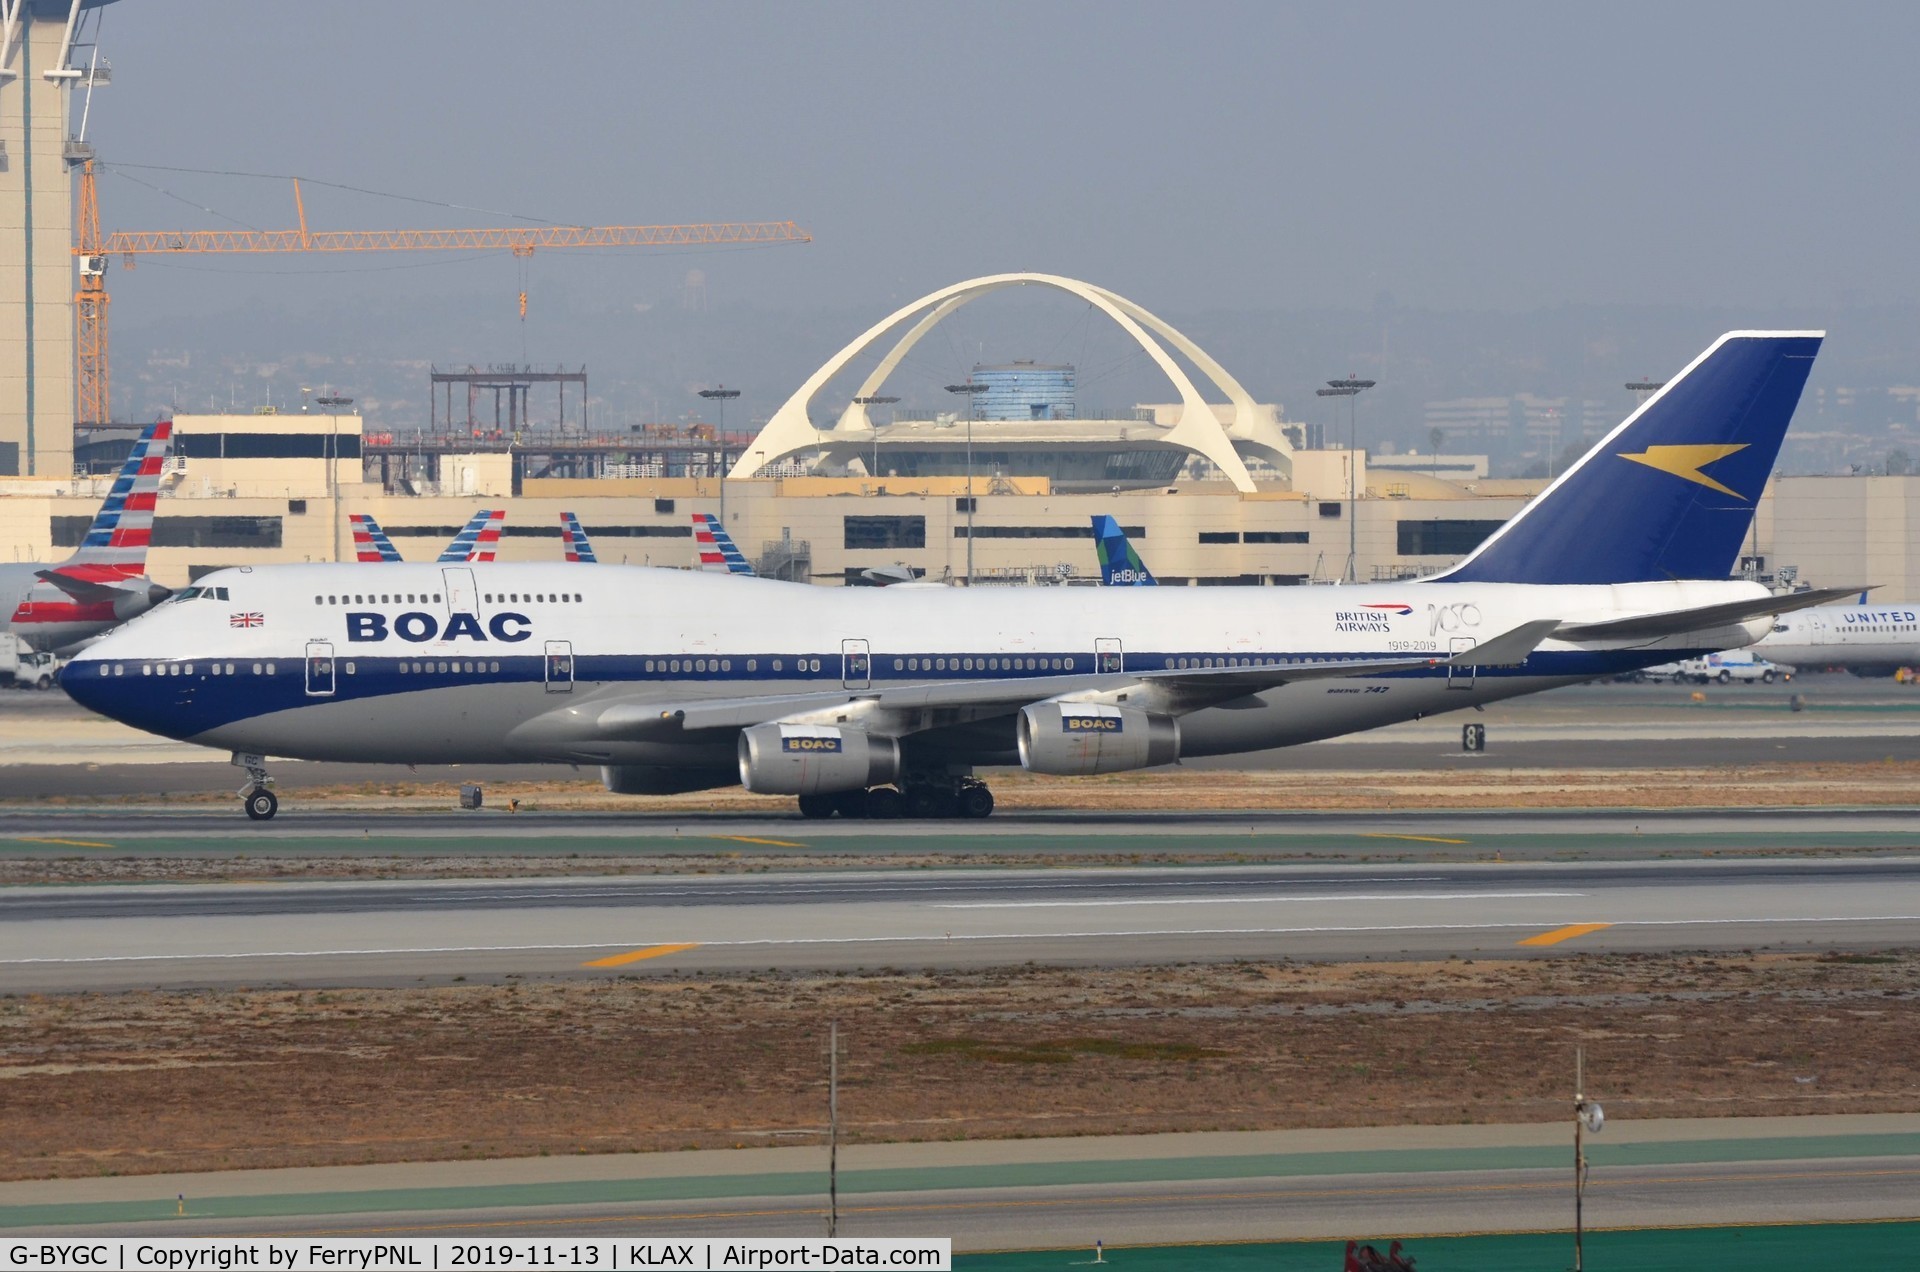 G-BYGC, 1999 Boeing 747-436 C/N 25823, BA B744 in classic BOAC livery arriving in LAX